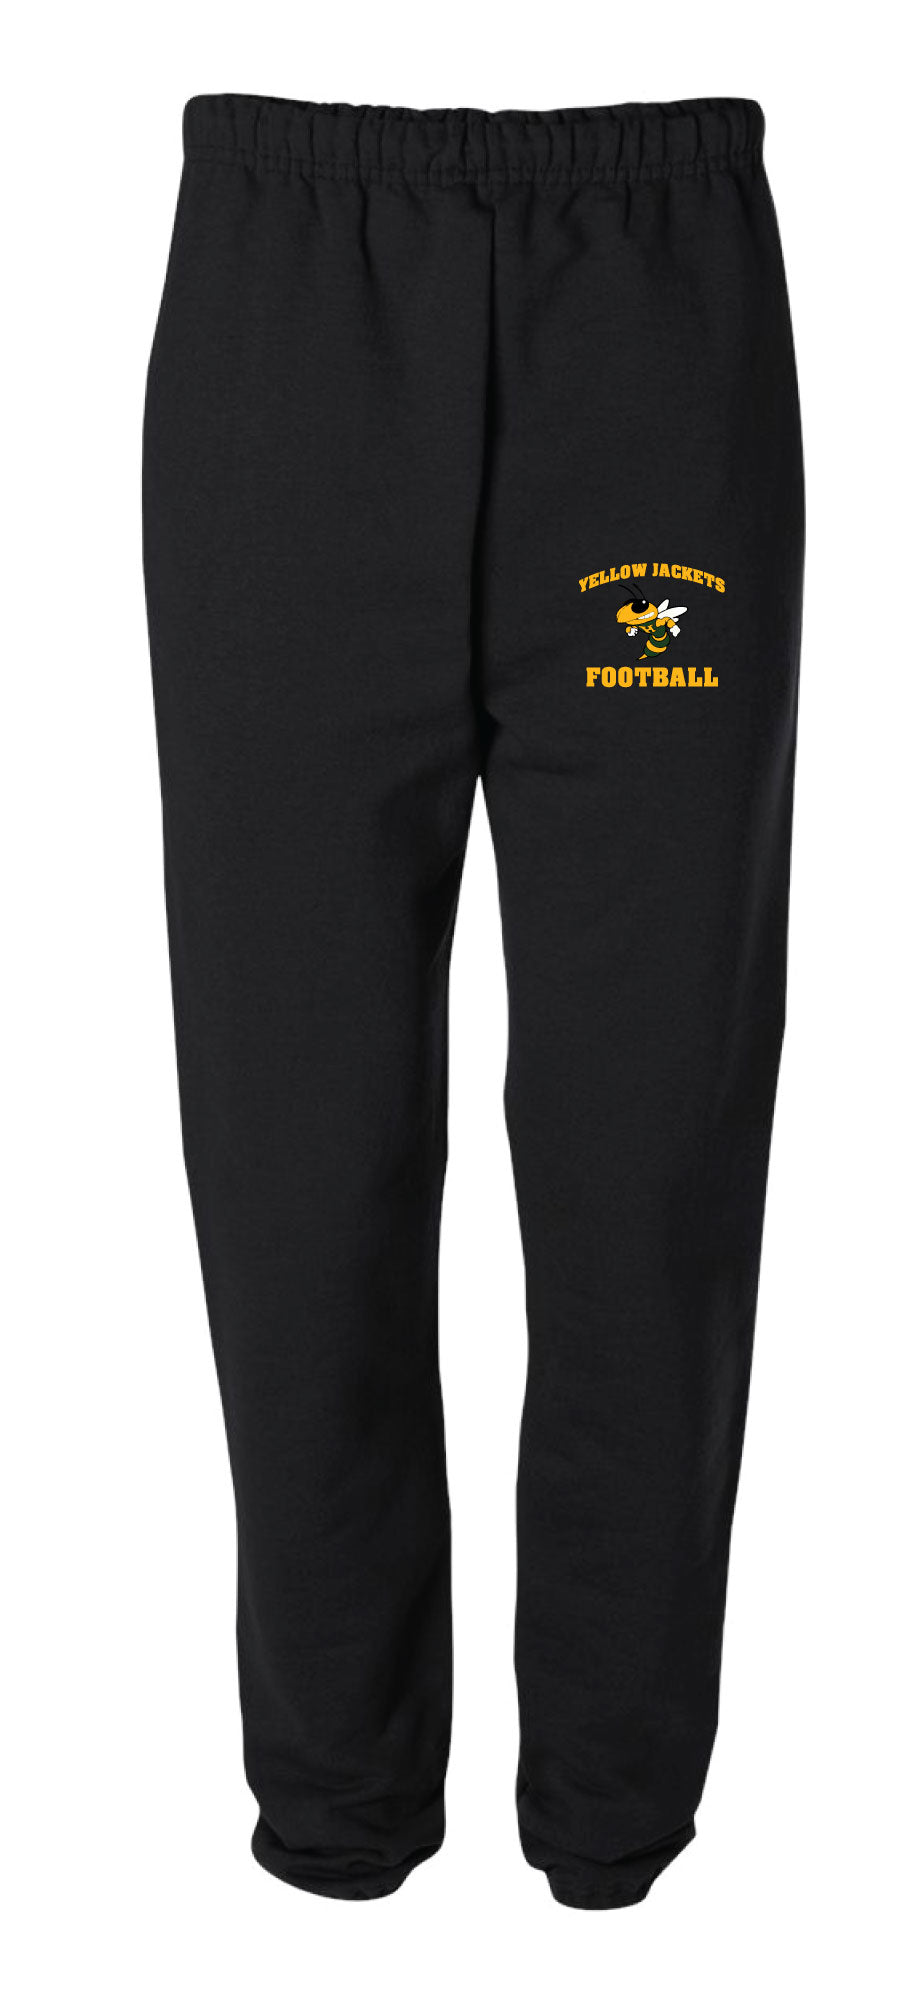 Yellow Jackets Football Cotton Sweatpants - Black - 5KounT2018